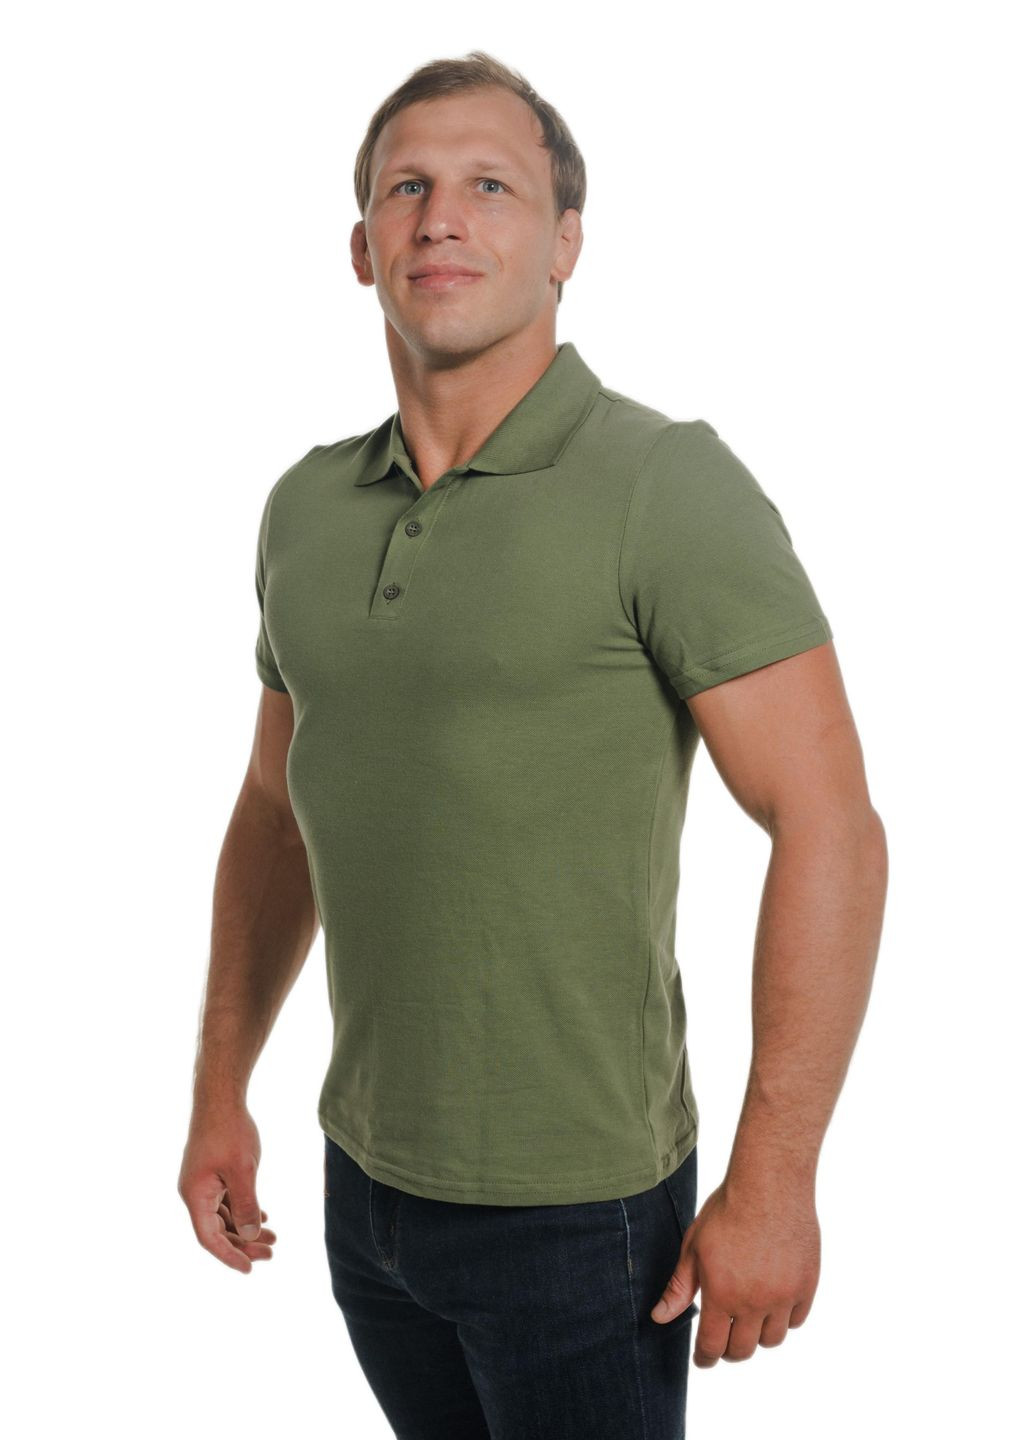 Оливковая футболка-футболка polo t m olive (019946) для мужчин Berserk Sport